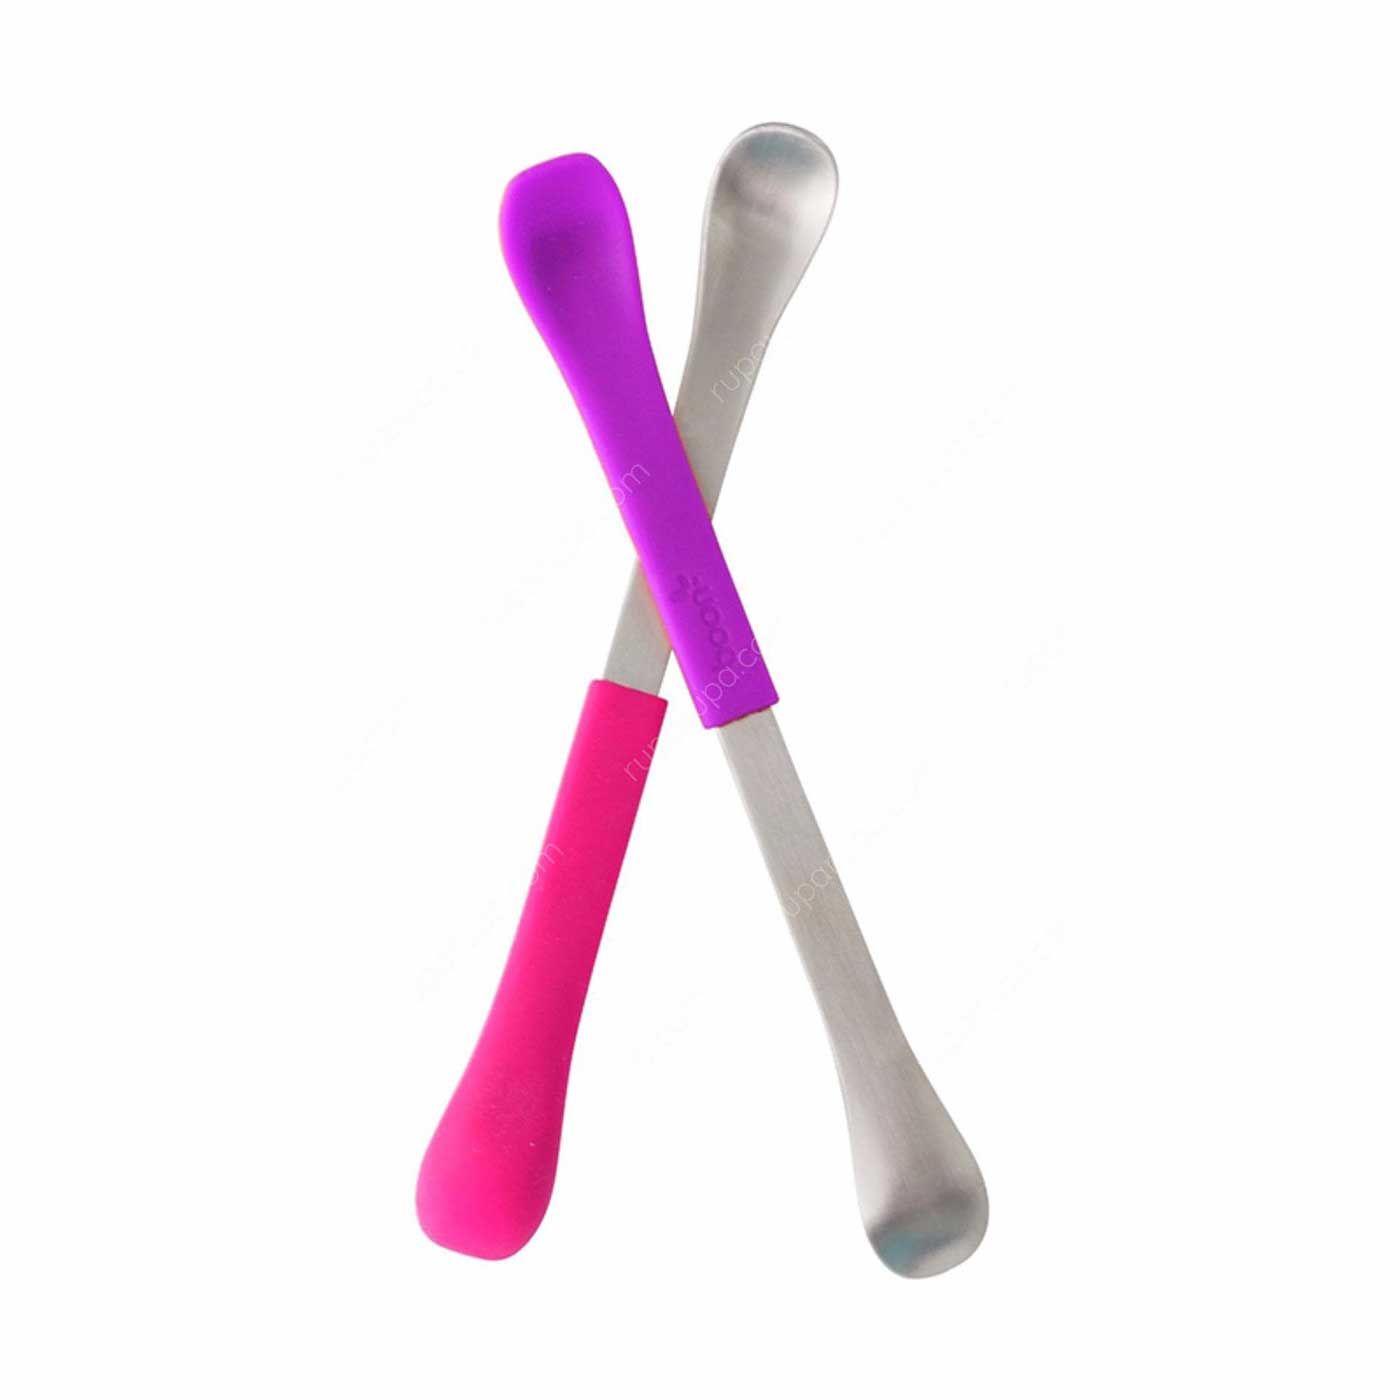 Boon Swap Feeding Spoon 2 In 1 (Pink-Magenta) - 10149 - 1